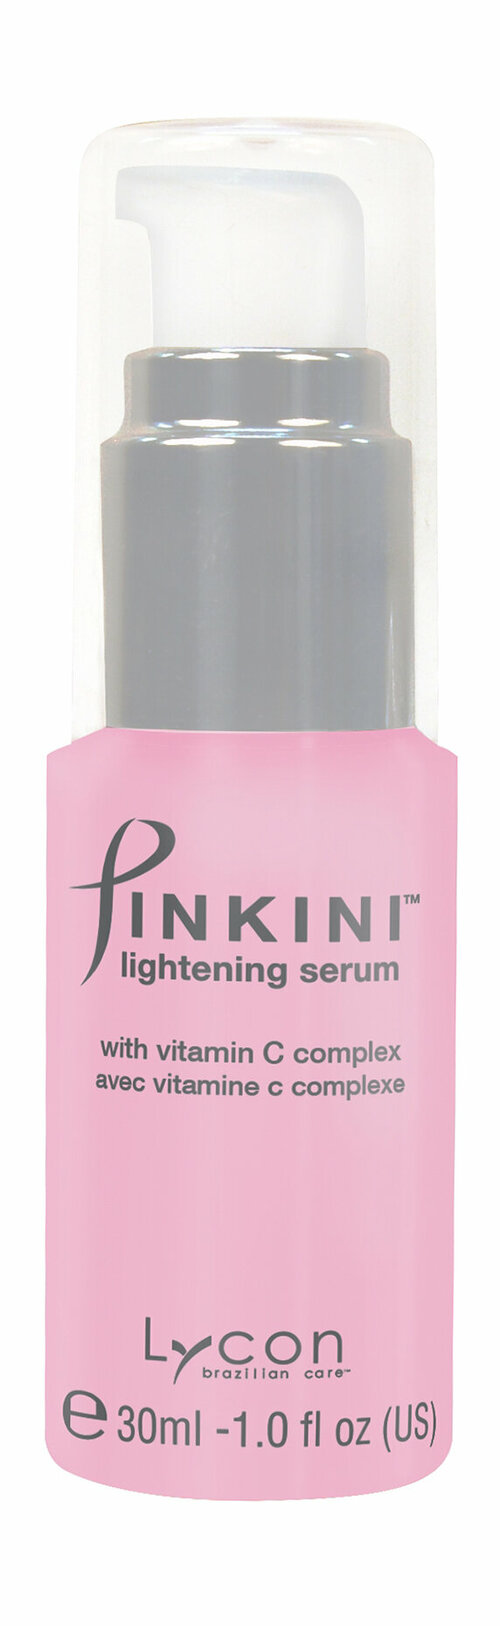 LYCON Сыворотка для осветления кожи бикини Pinkini lightening Serum, 30 мл